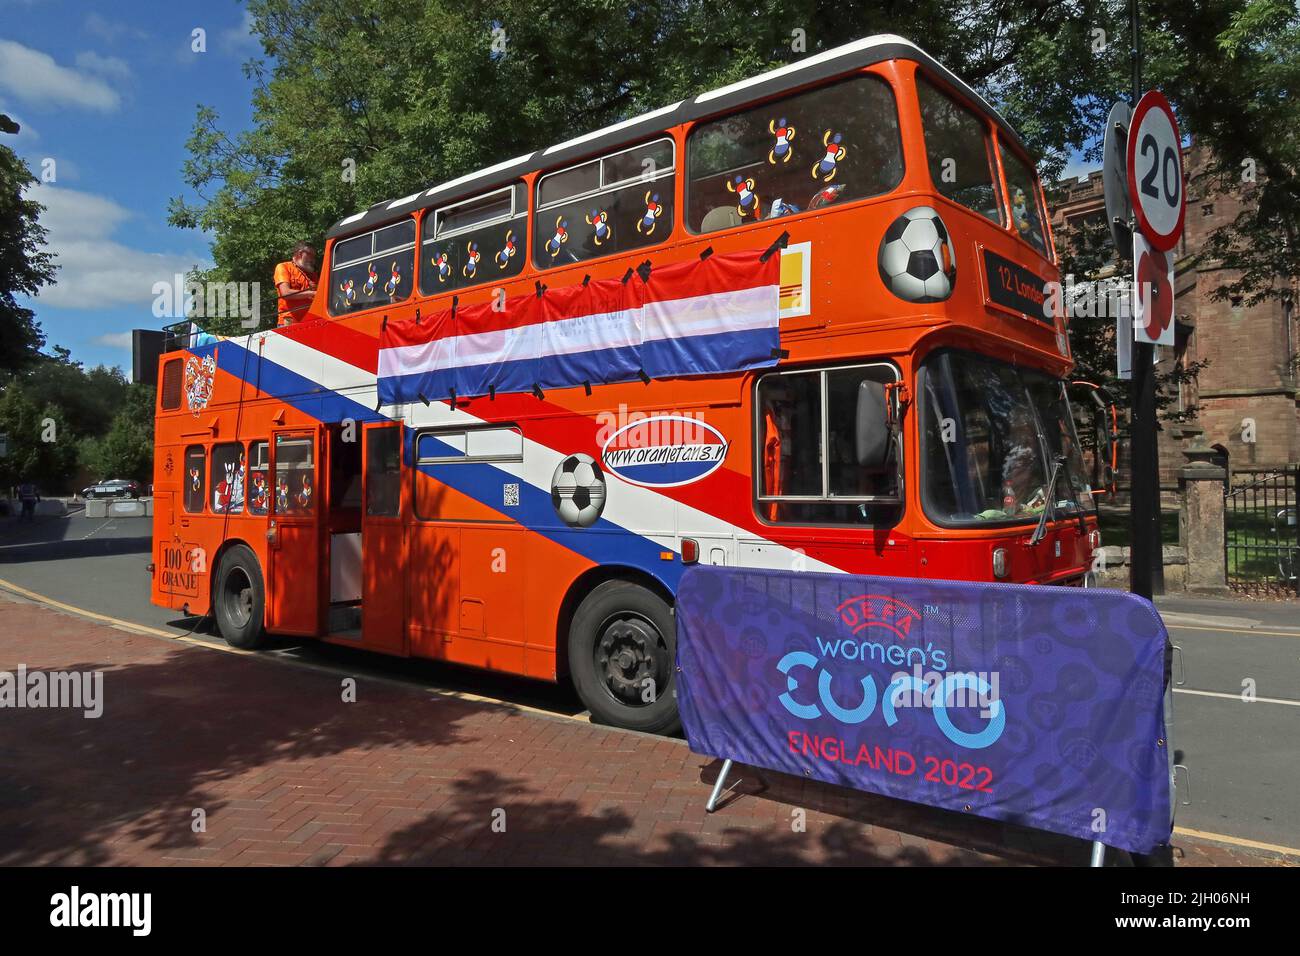 OranjeFans Holland Orange womens football tour bus in Leigh, near Wigan, 12 destination Londen, BJ-DH-95 Stock Photo